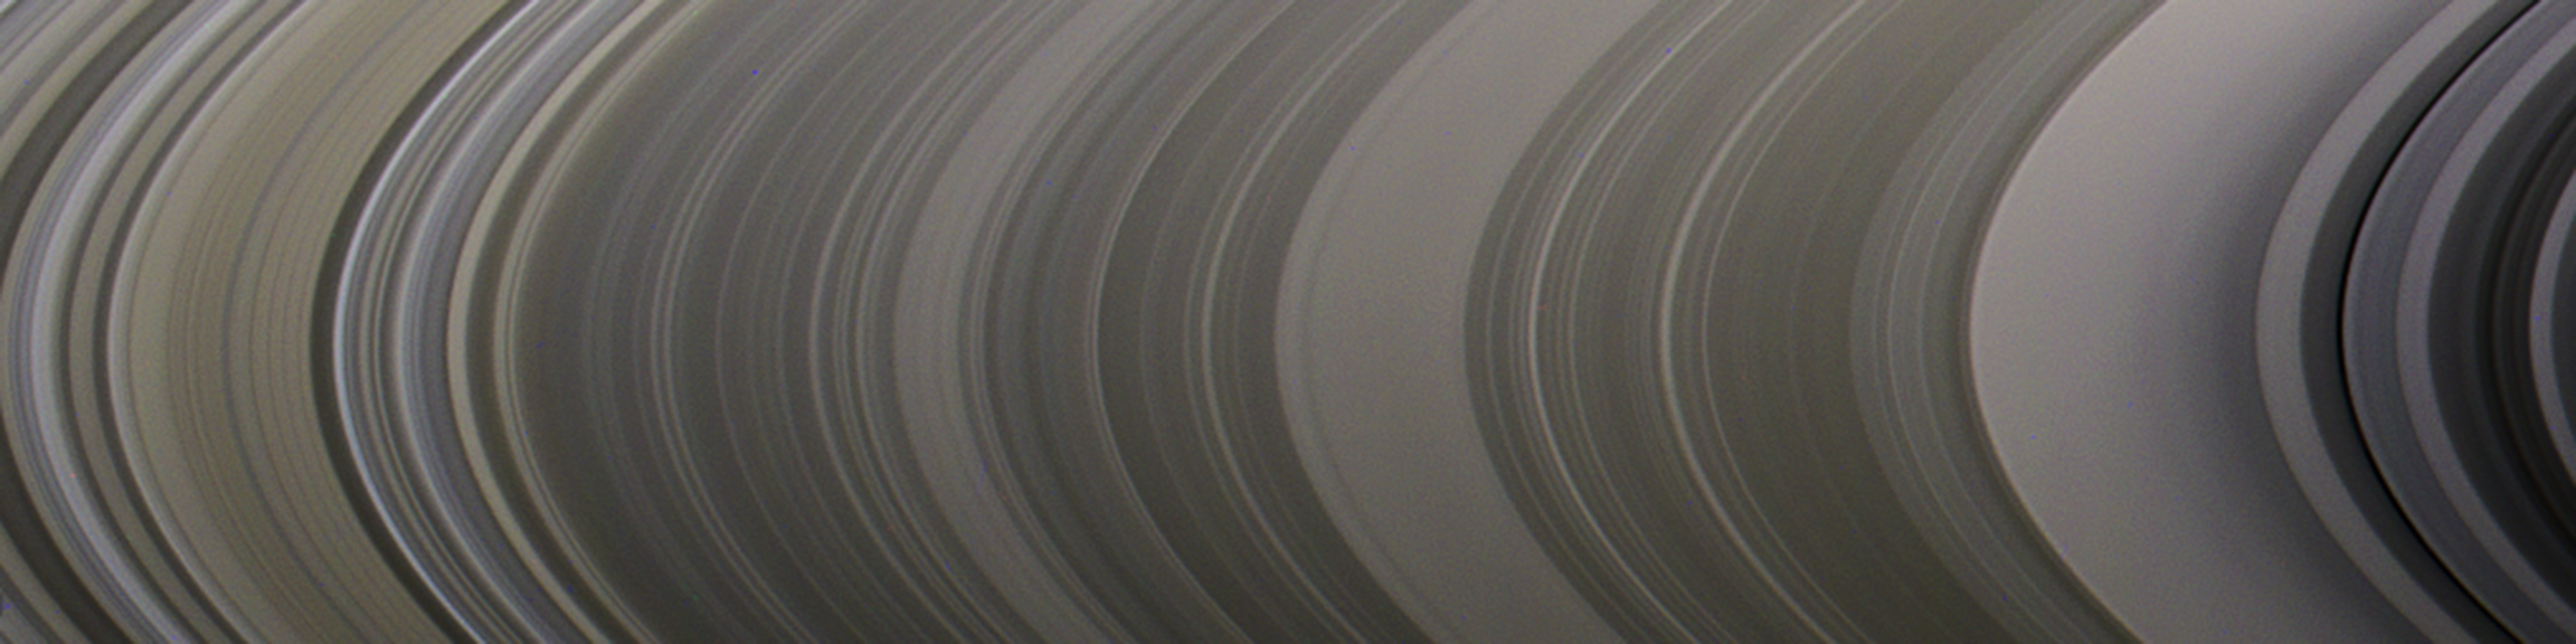 Detail of Saturn’s rings taken by NASA’s Cassini spacecraft